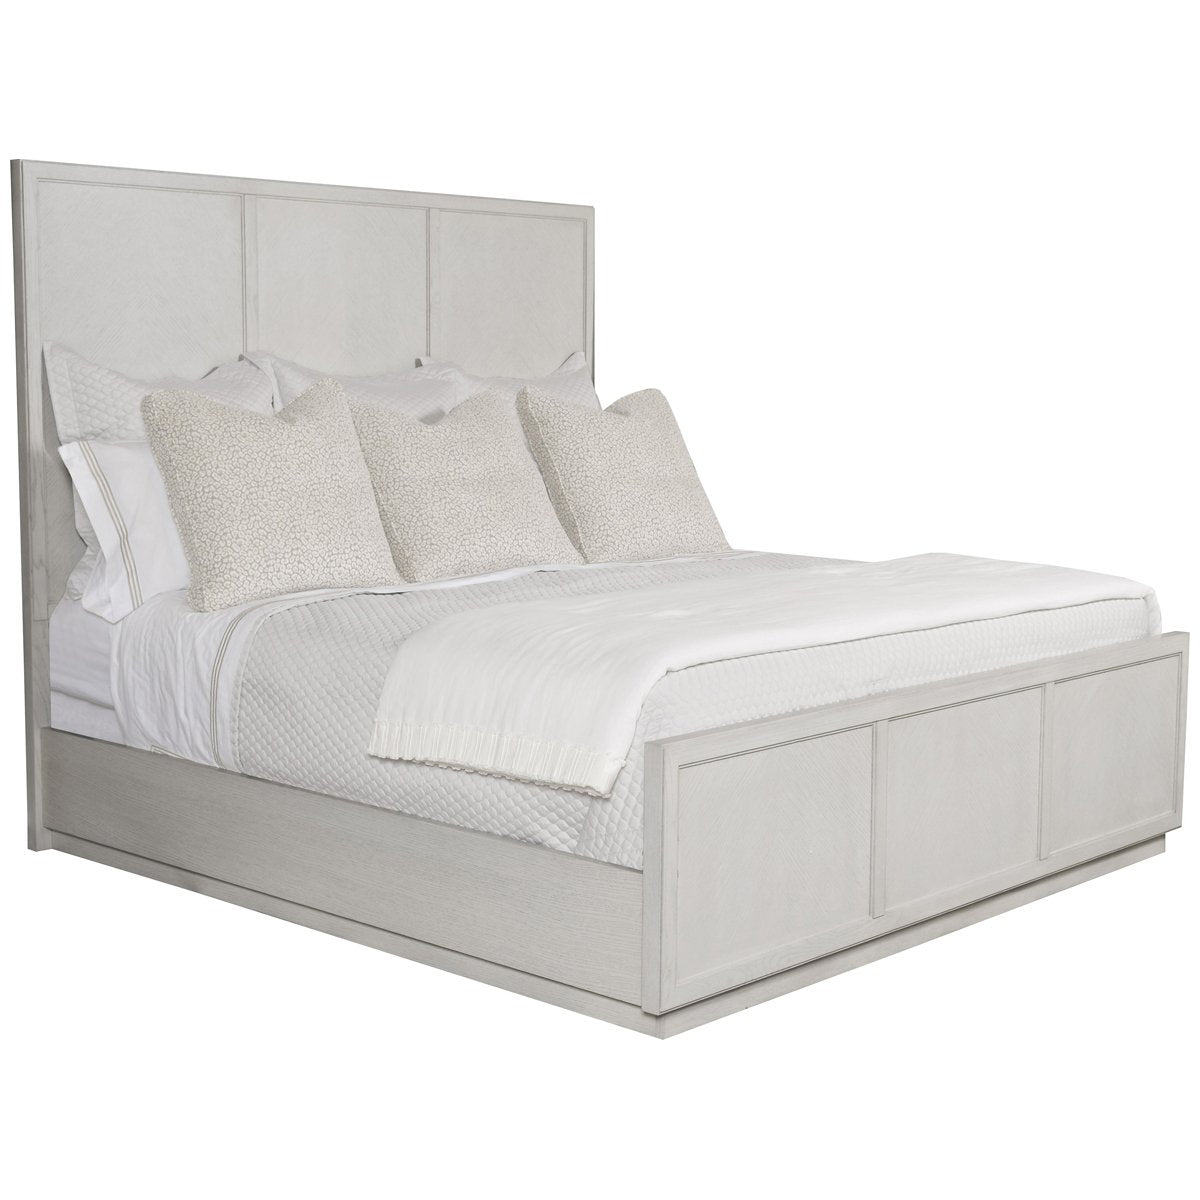 Vanguard Furniture Walt King Bed